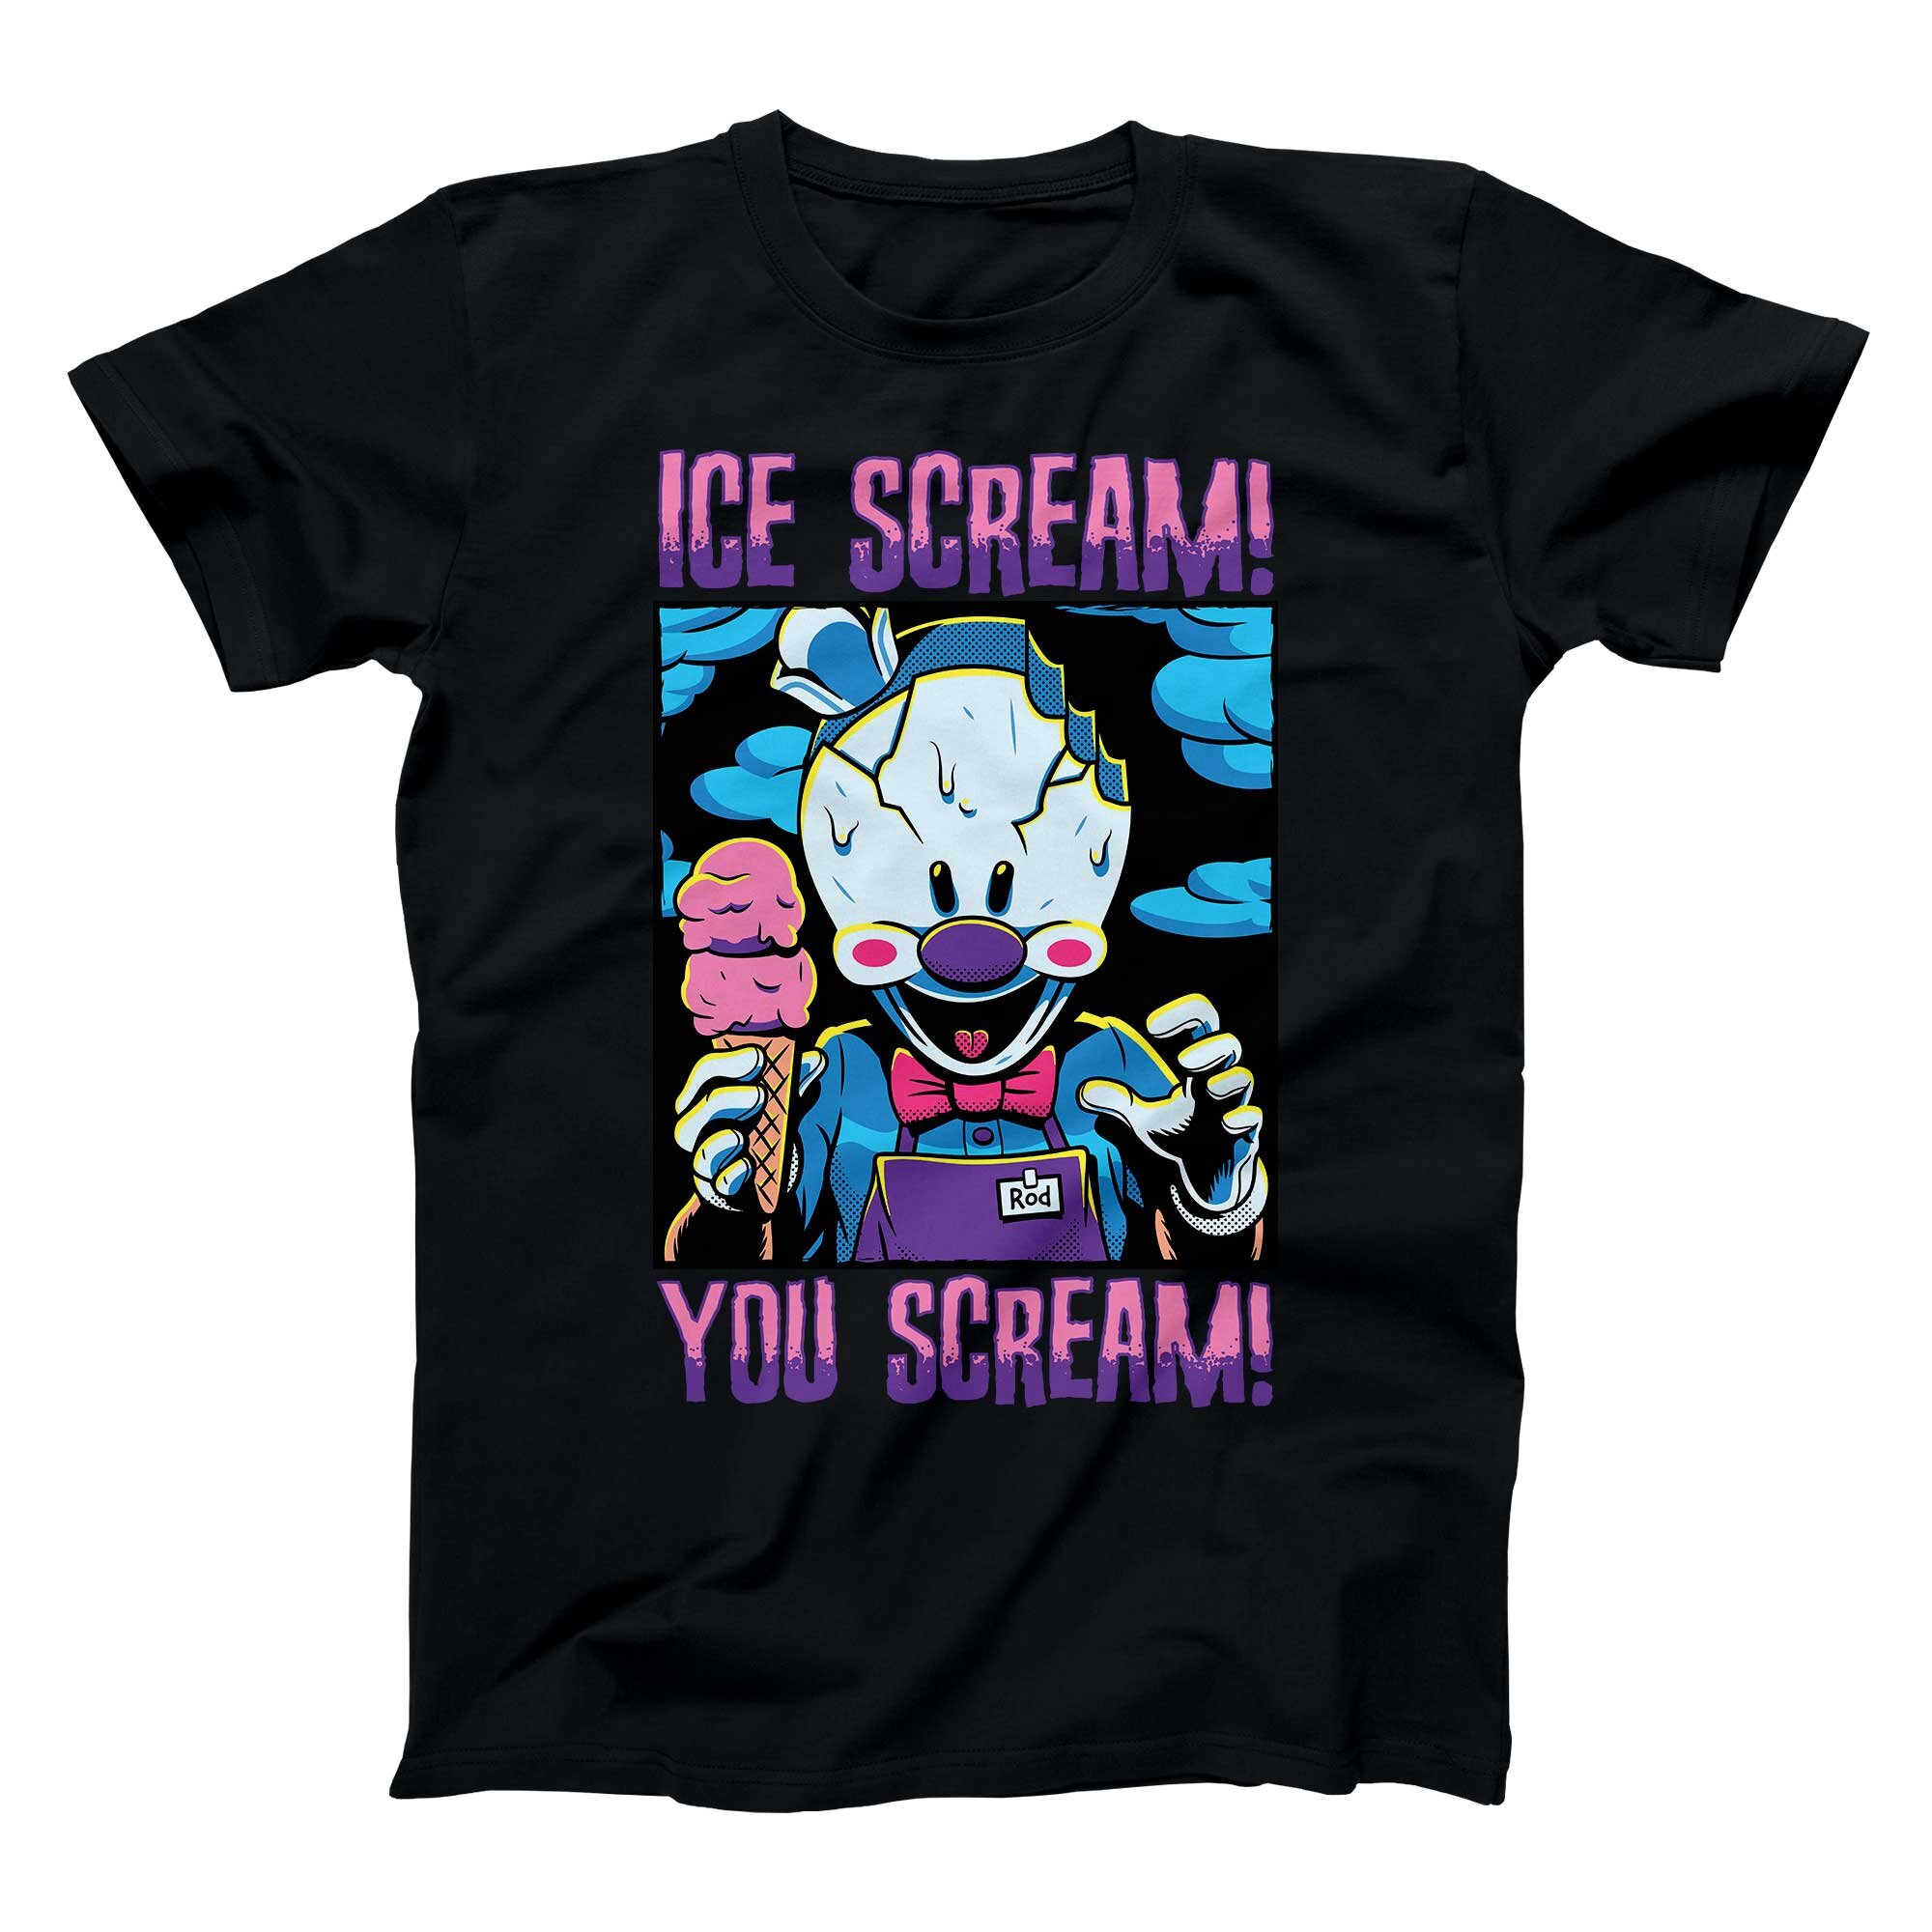 Ice Scream - You Scream!